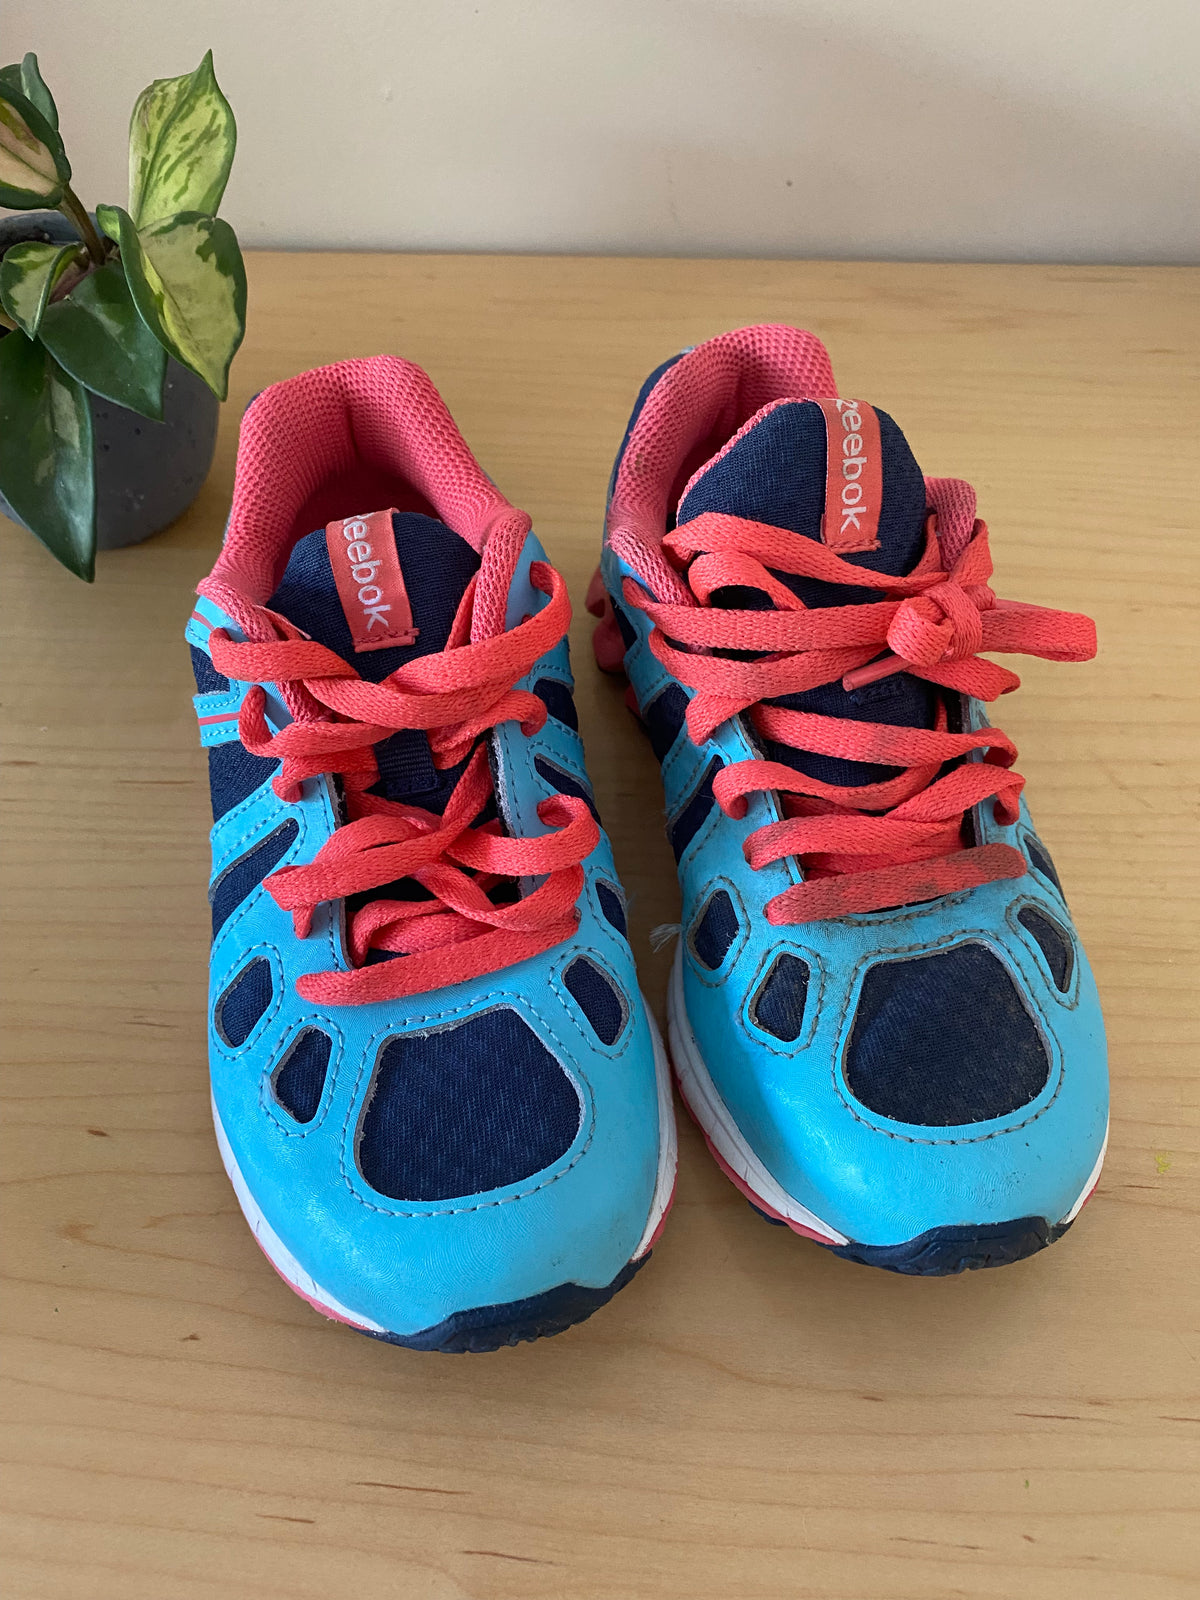 Running Shoes (Toddler Girls Size 11)